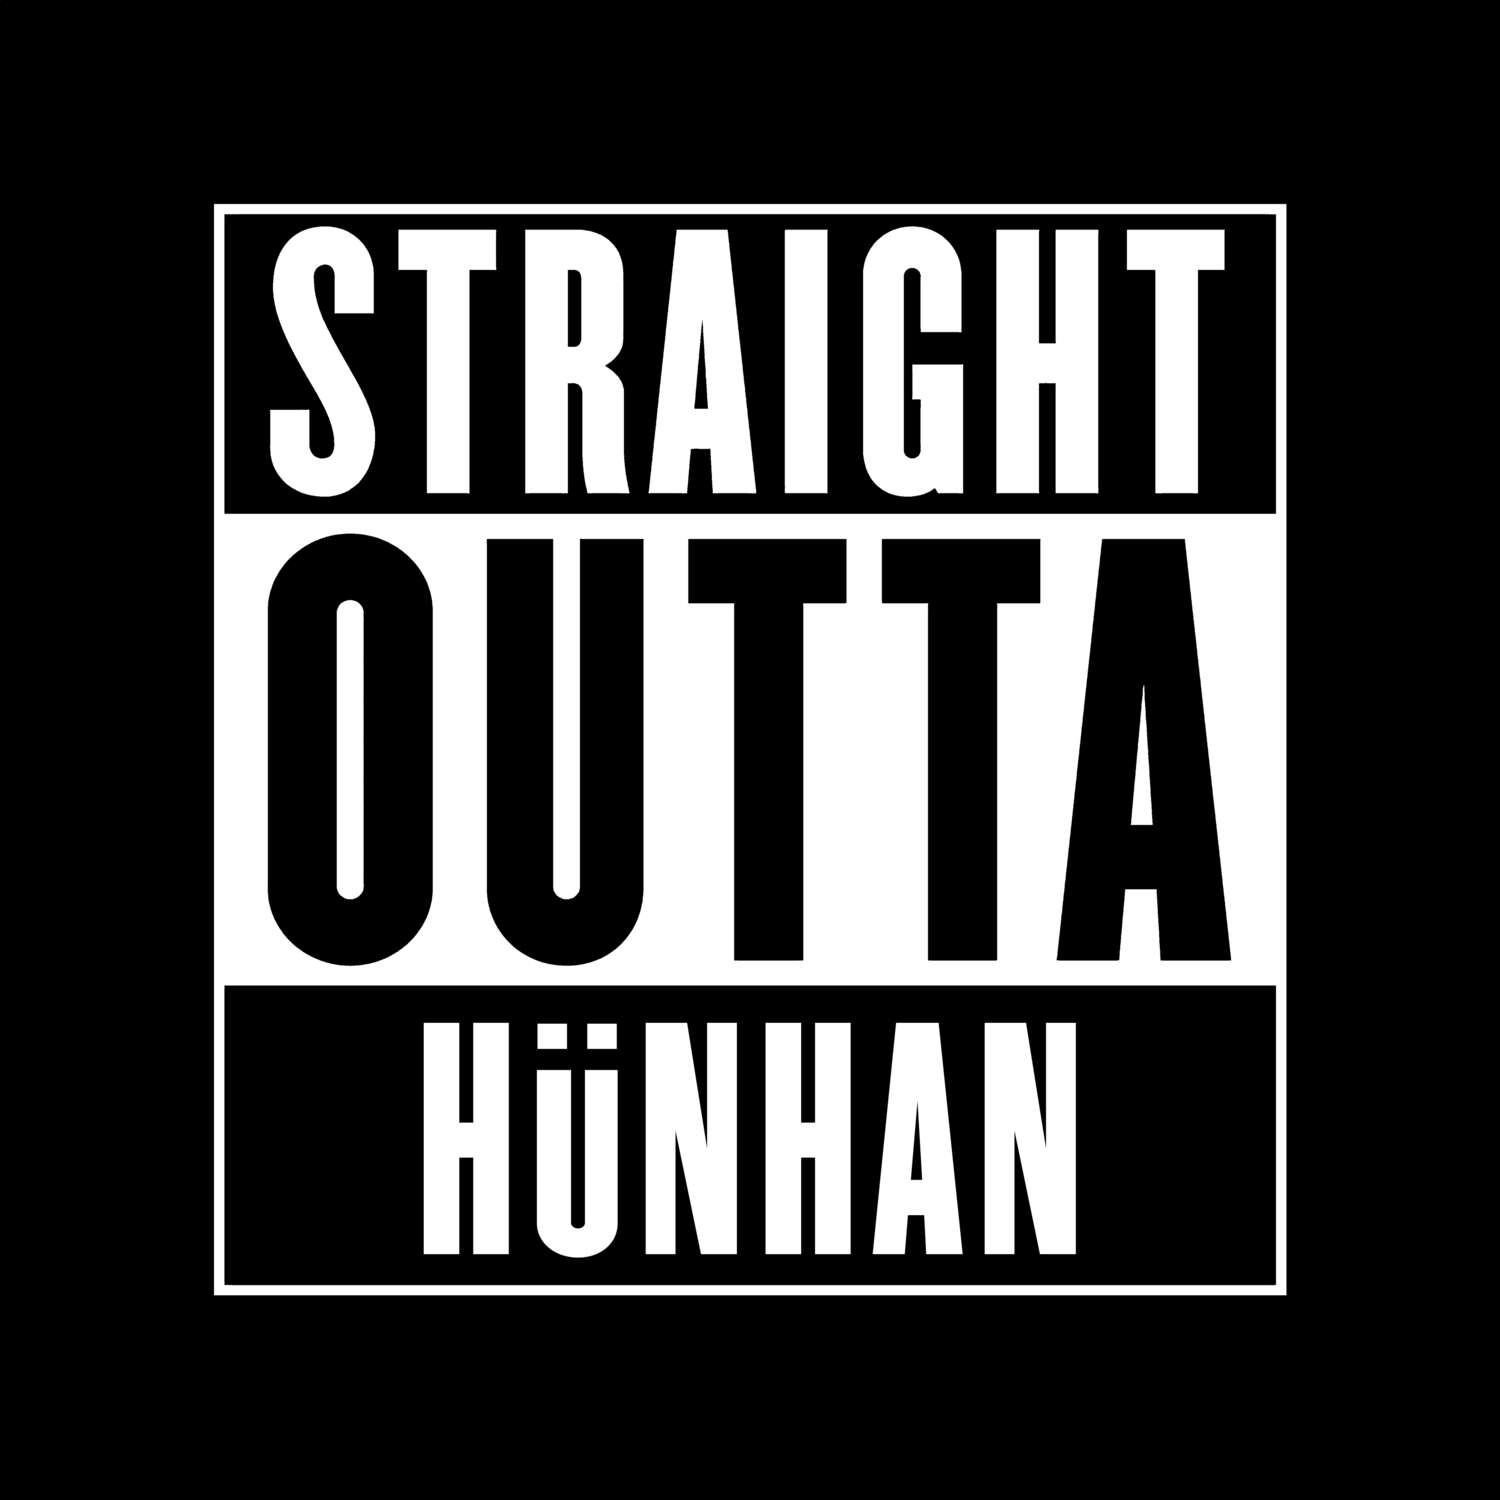 Hünhan T-Shirt »Straight Outta«